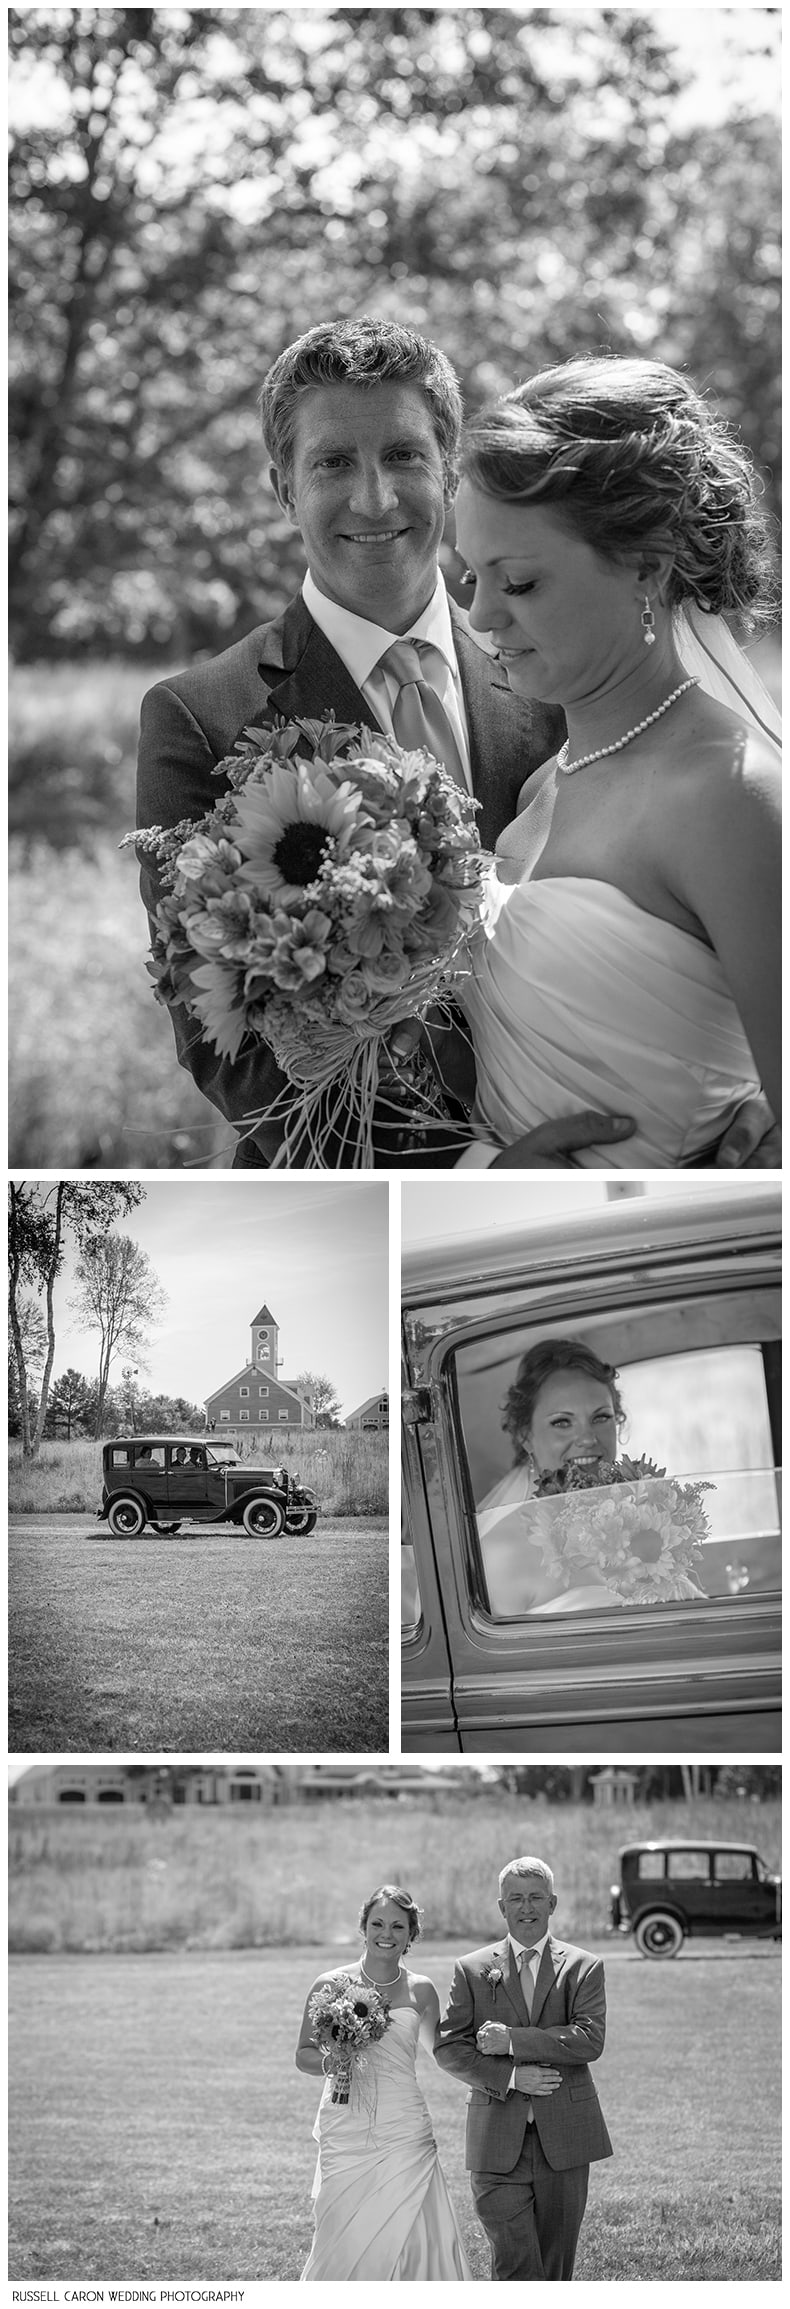 maine wedding photographer uses black and white